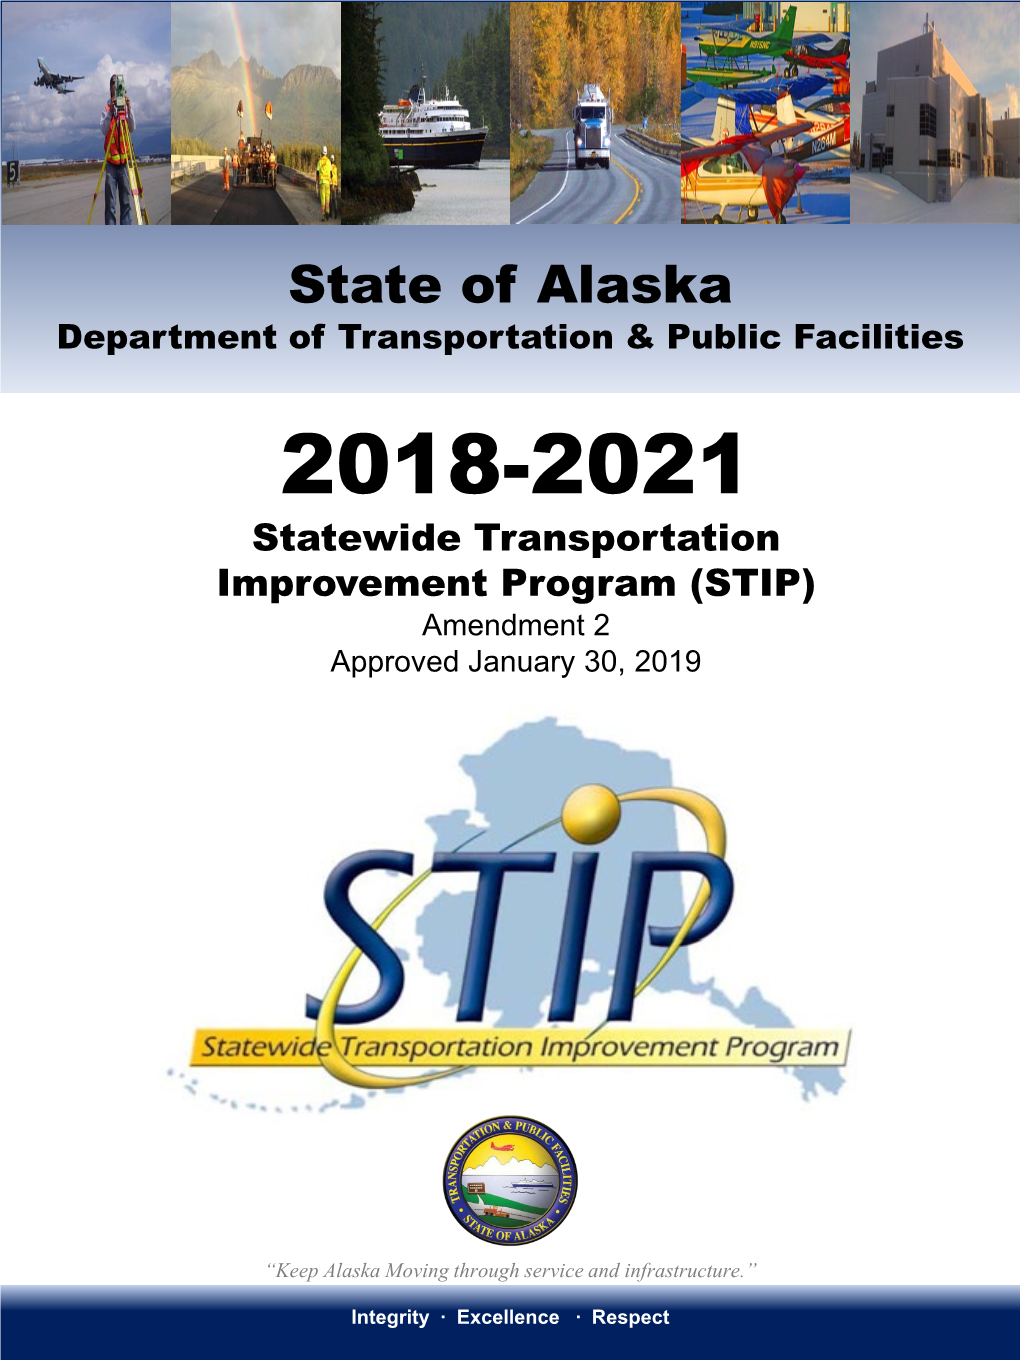 State of Alaska Department of Transportation & Public Facilities 2018-2021 Statewide Transportation Improvement Program (STIP) Amendment 2 Approved January 30, 2019